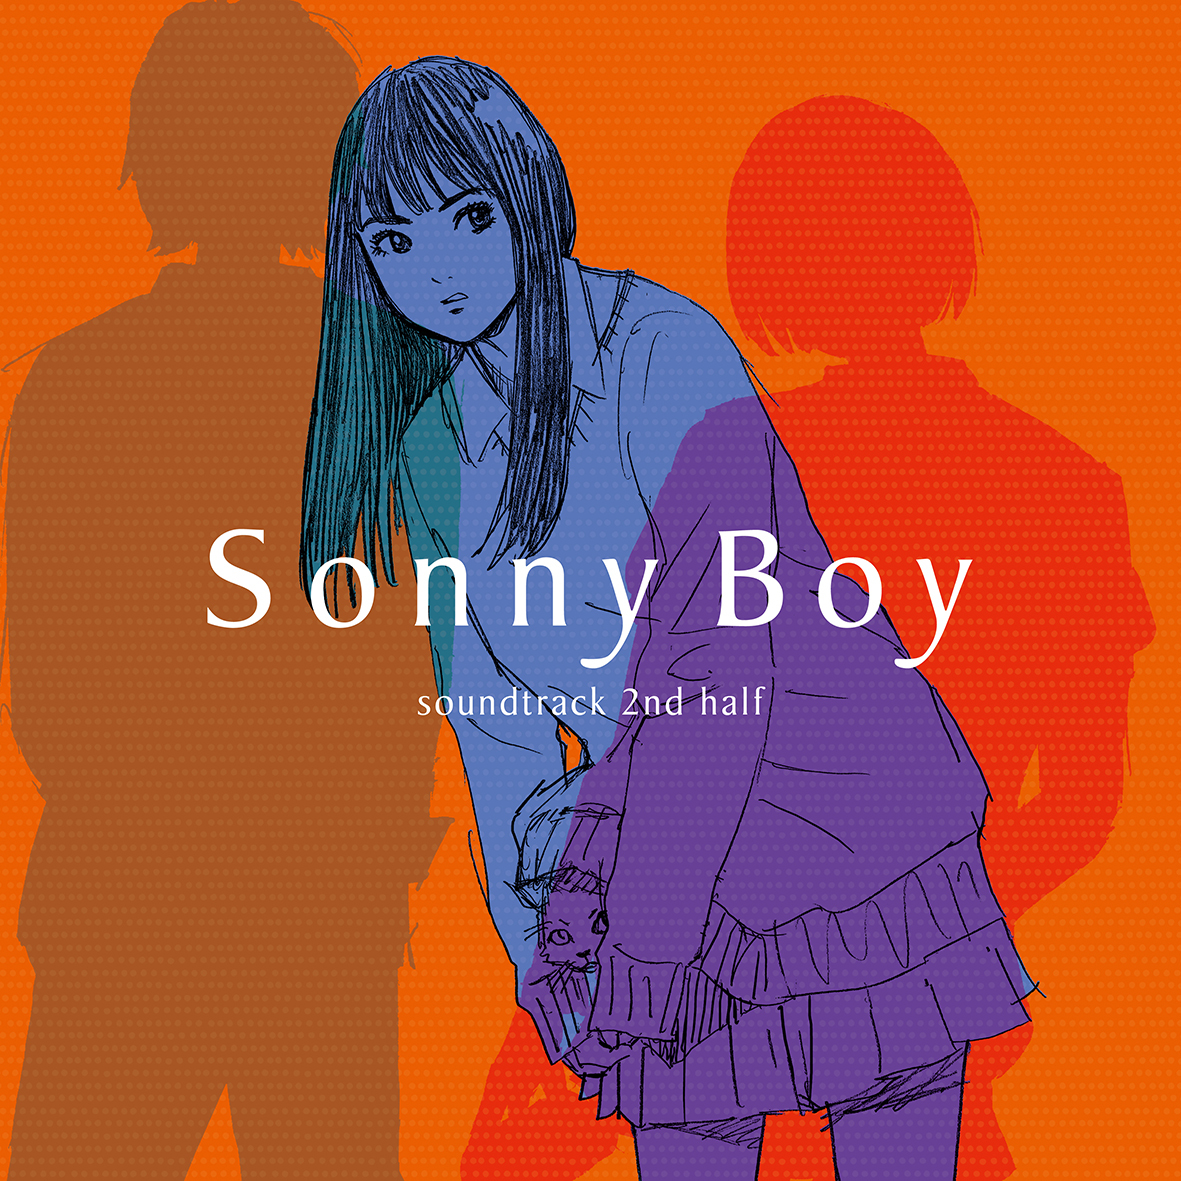 『soundtrack 2nd half』ジャケット (c)Sonny Boy committee